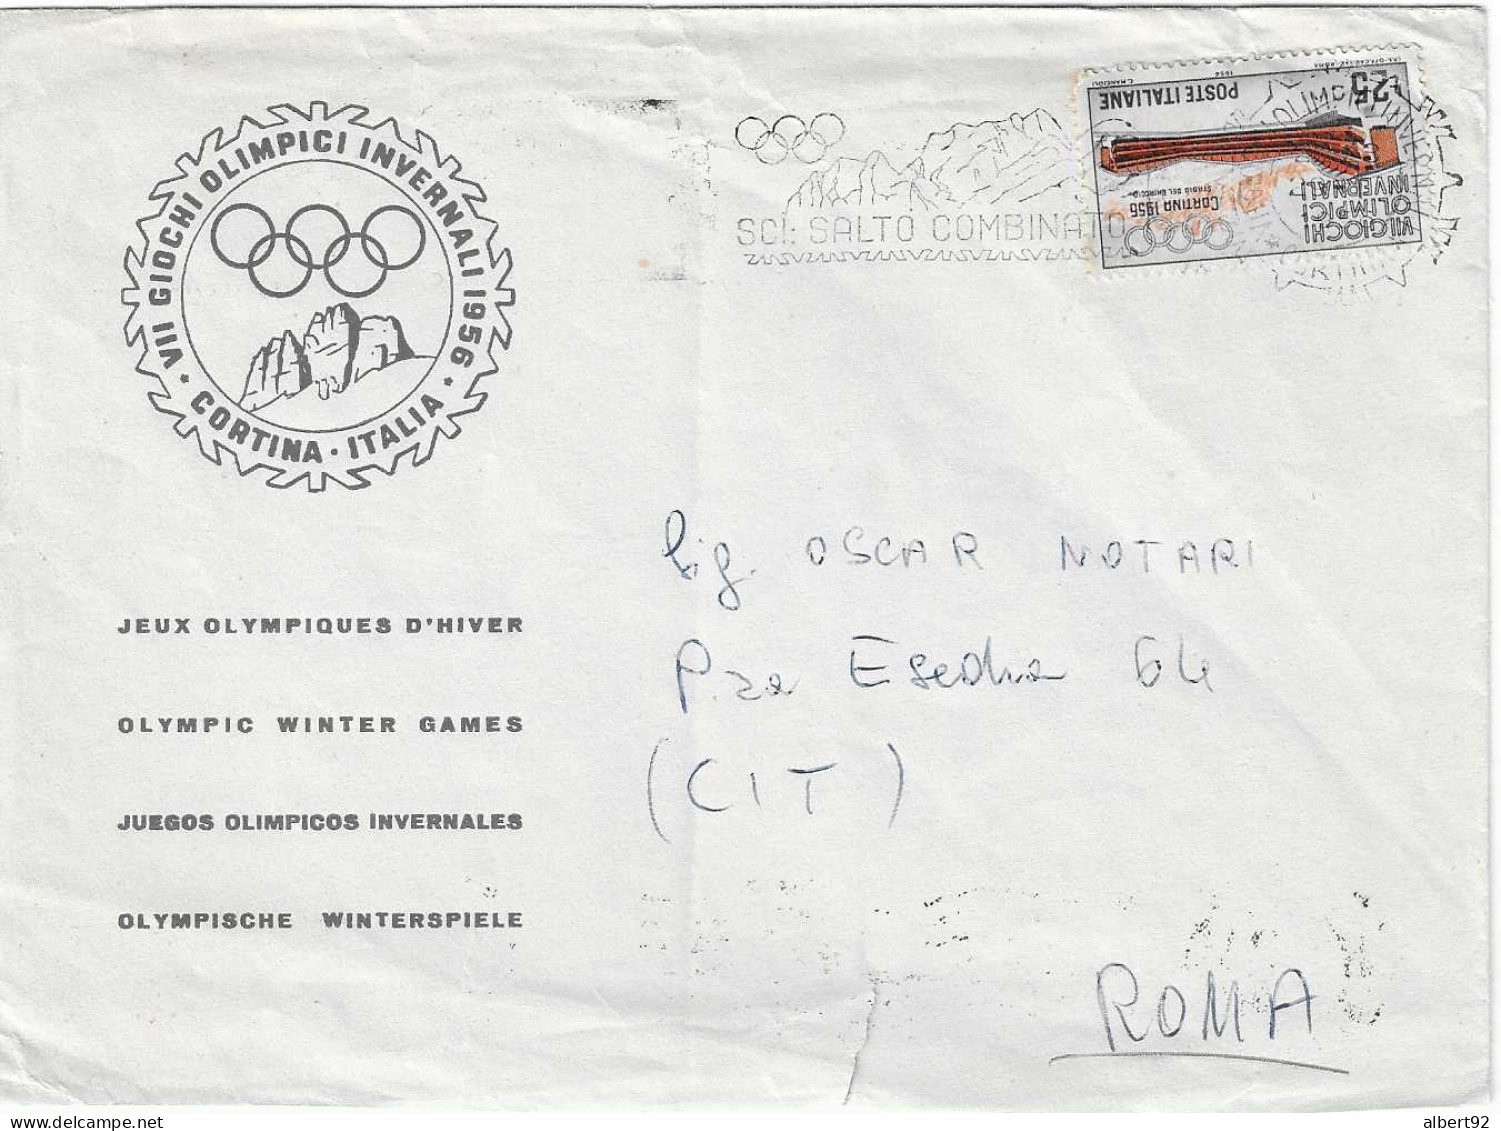 1956 Jeux Olympiques D'Hiver De Cortina D'Ampezzo: Combiné Nordique - Inverno1956: Cortina D'Ampezzo